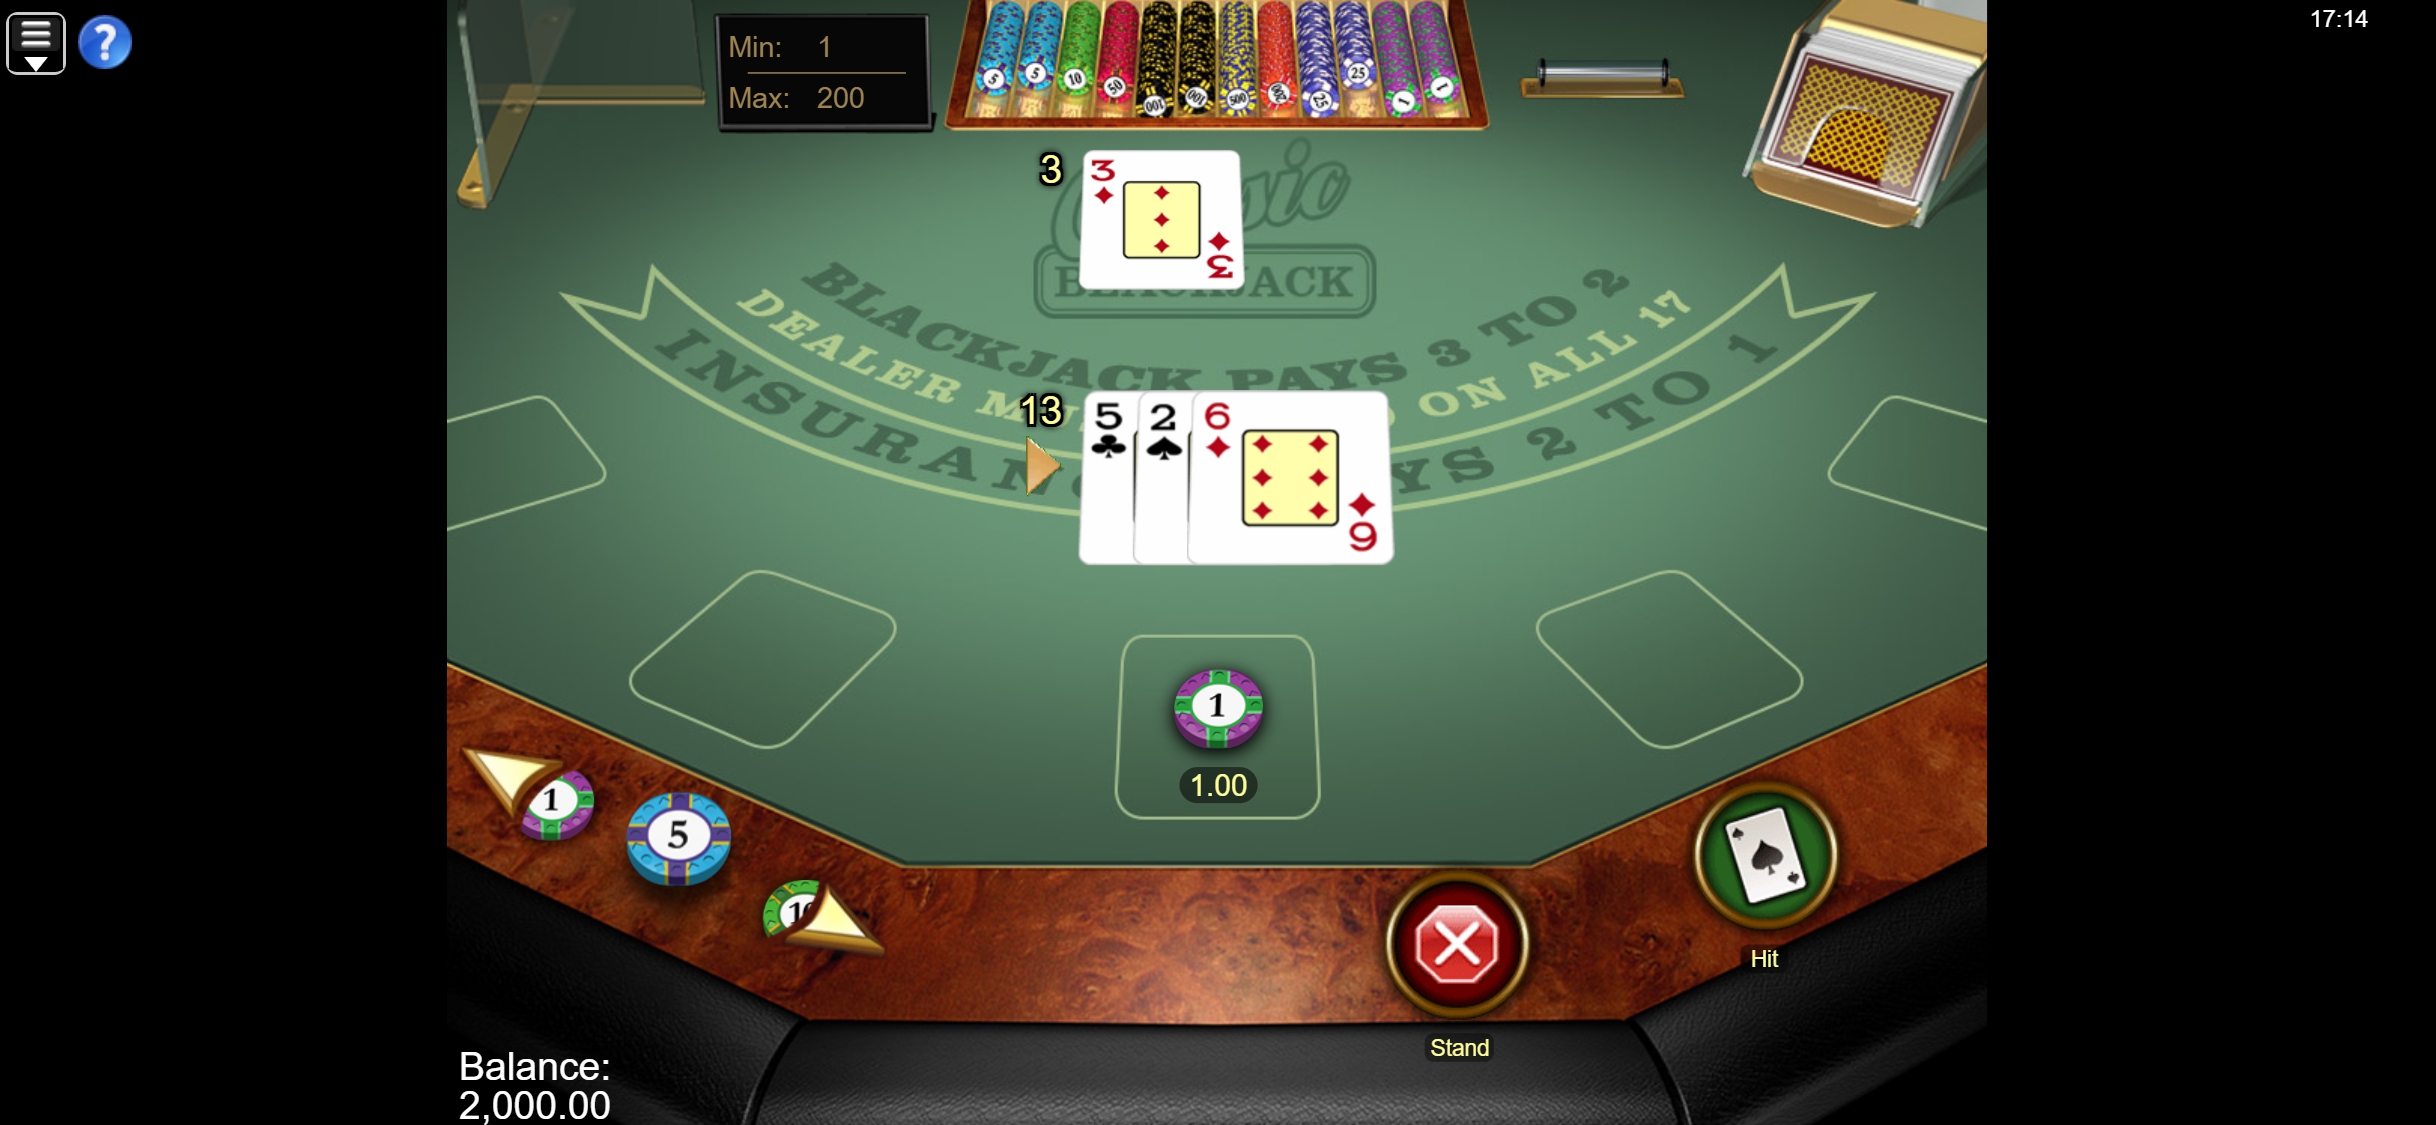 Scratch 2 Cash Casino Mobile Slots Review